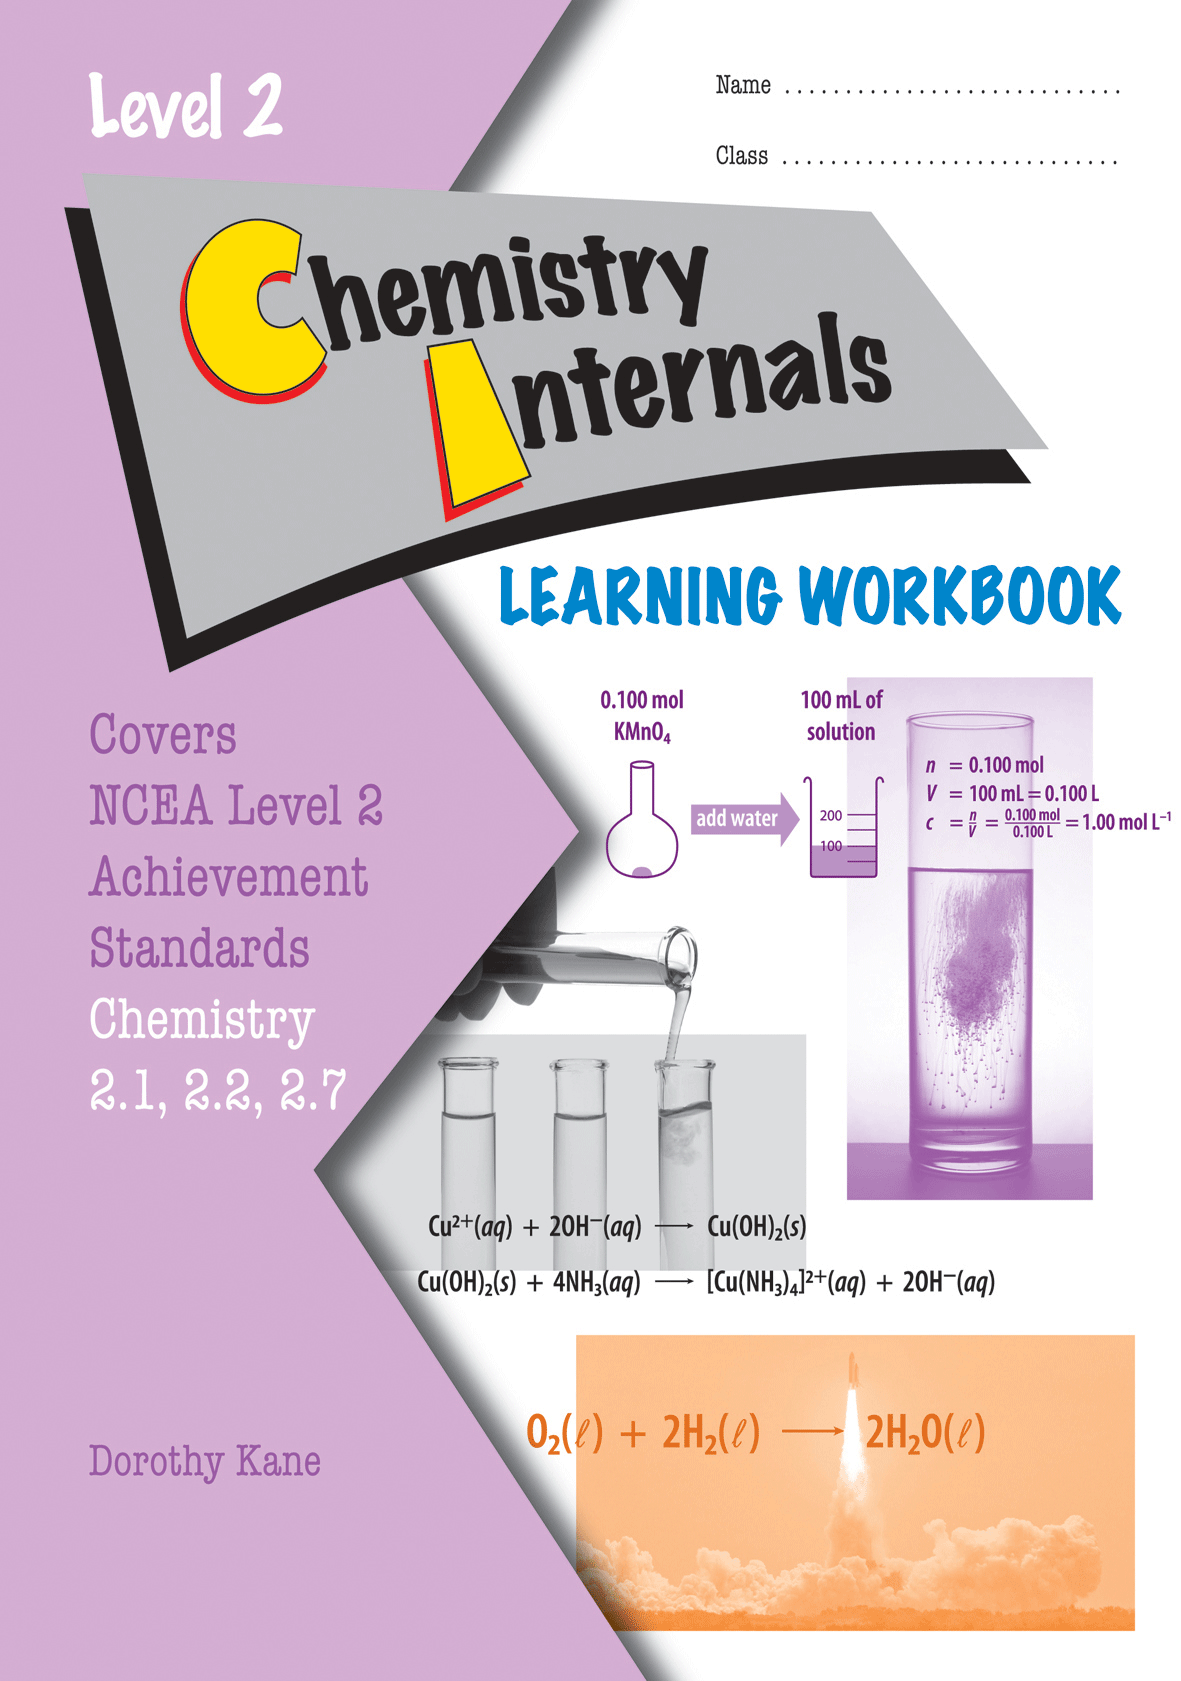 Level 2 Chemistry Internals Learning Workbook